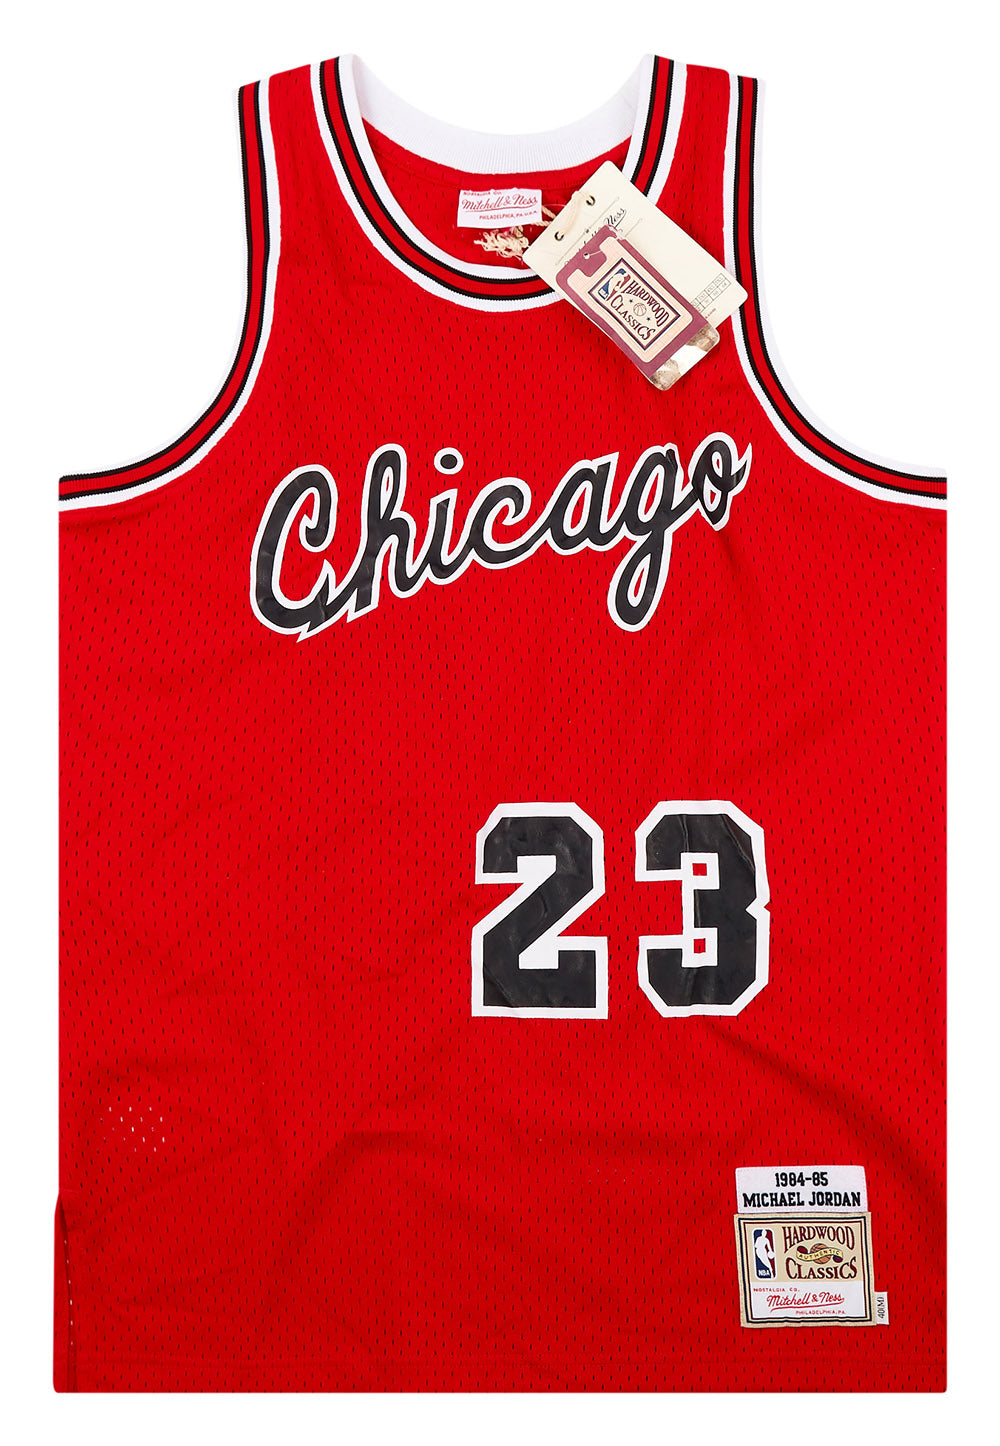 1984 chicago bulls jersey